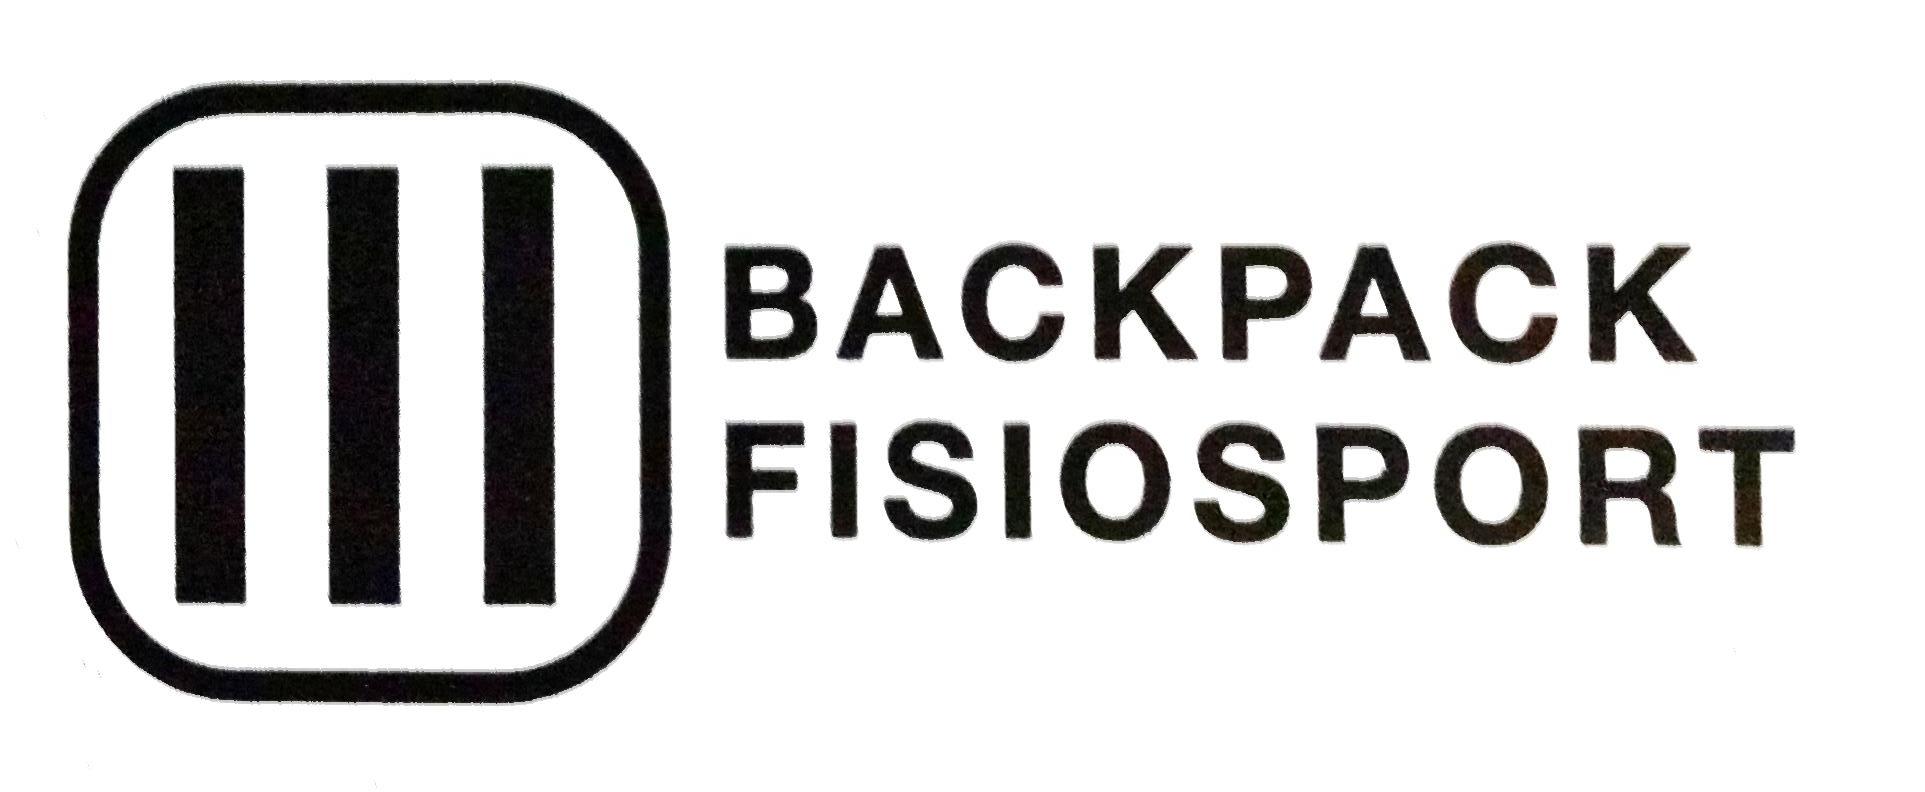 Backpackfisiosport